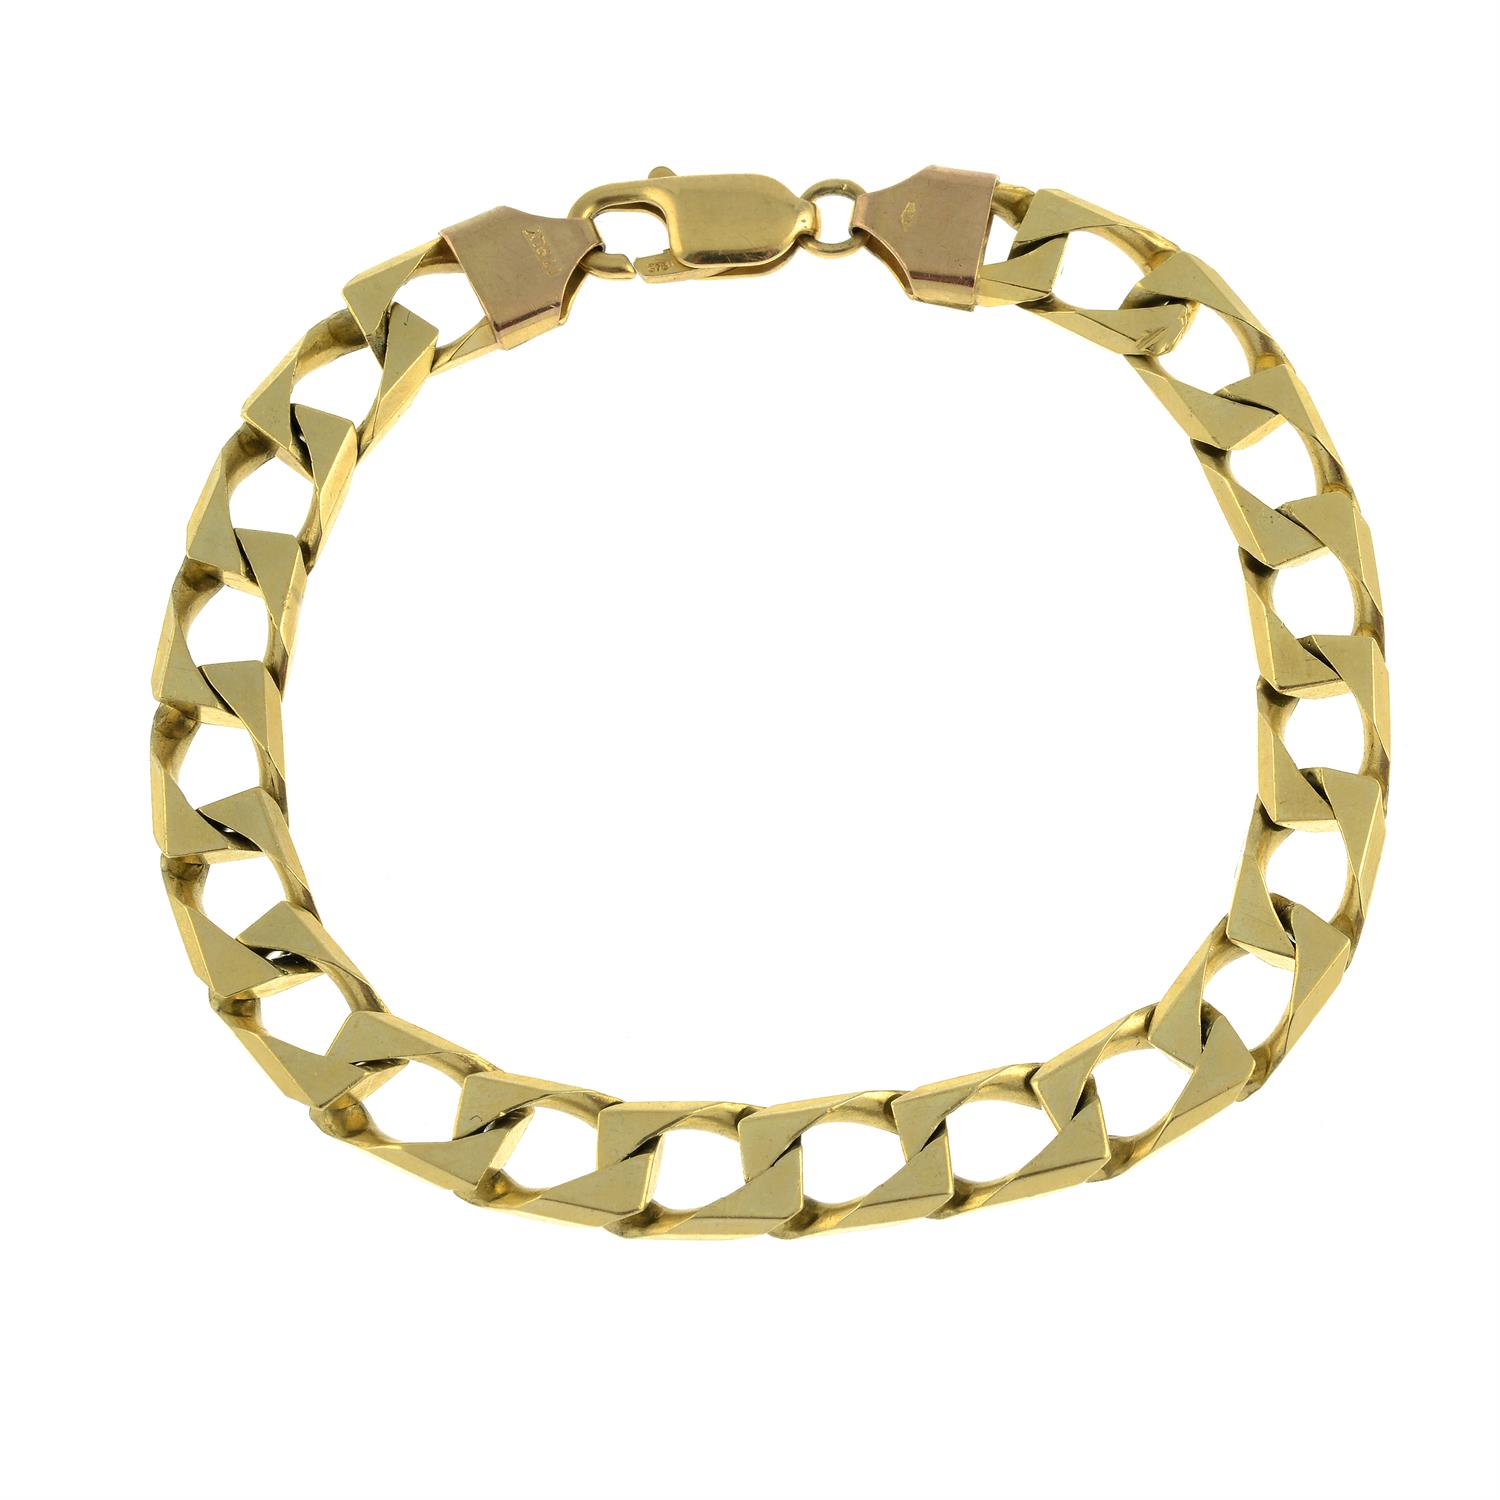 A 9ct gold curb-link chain bracelet.